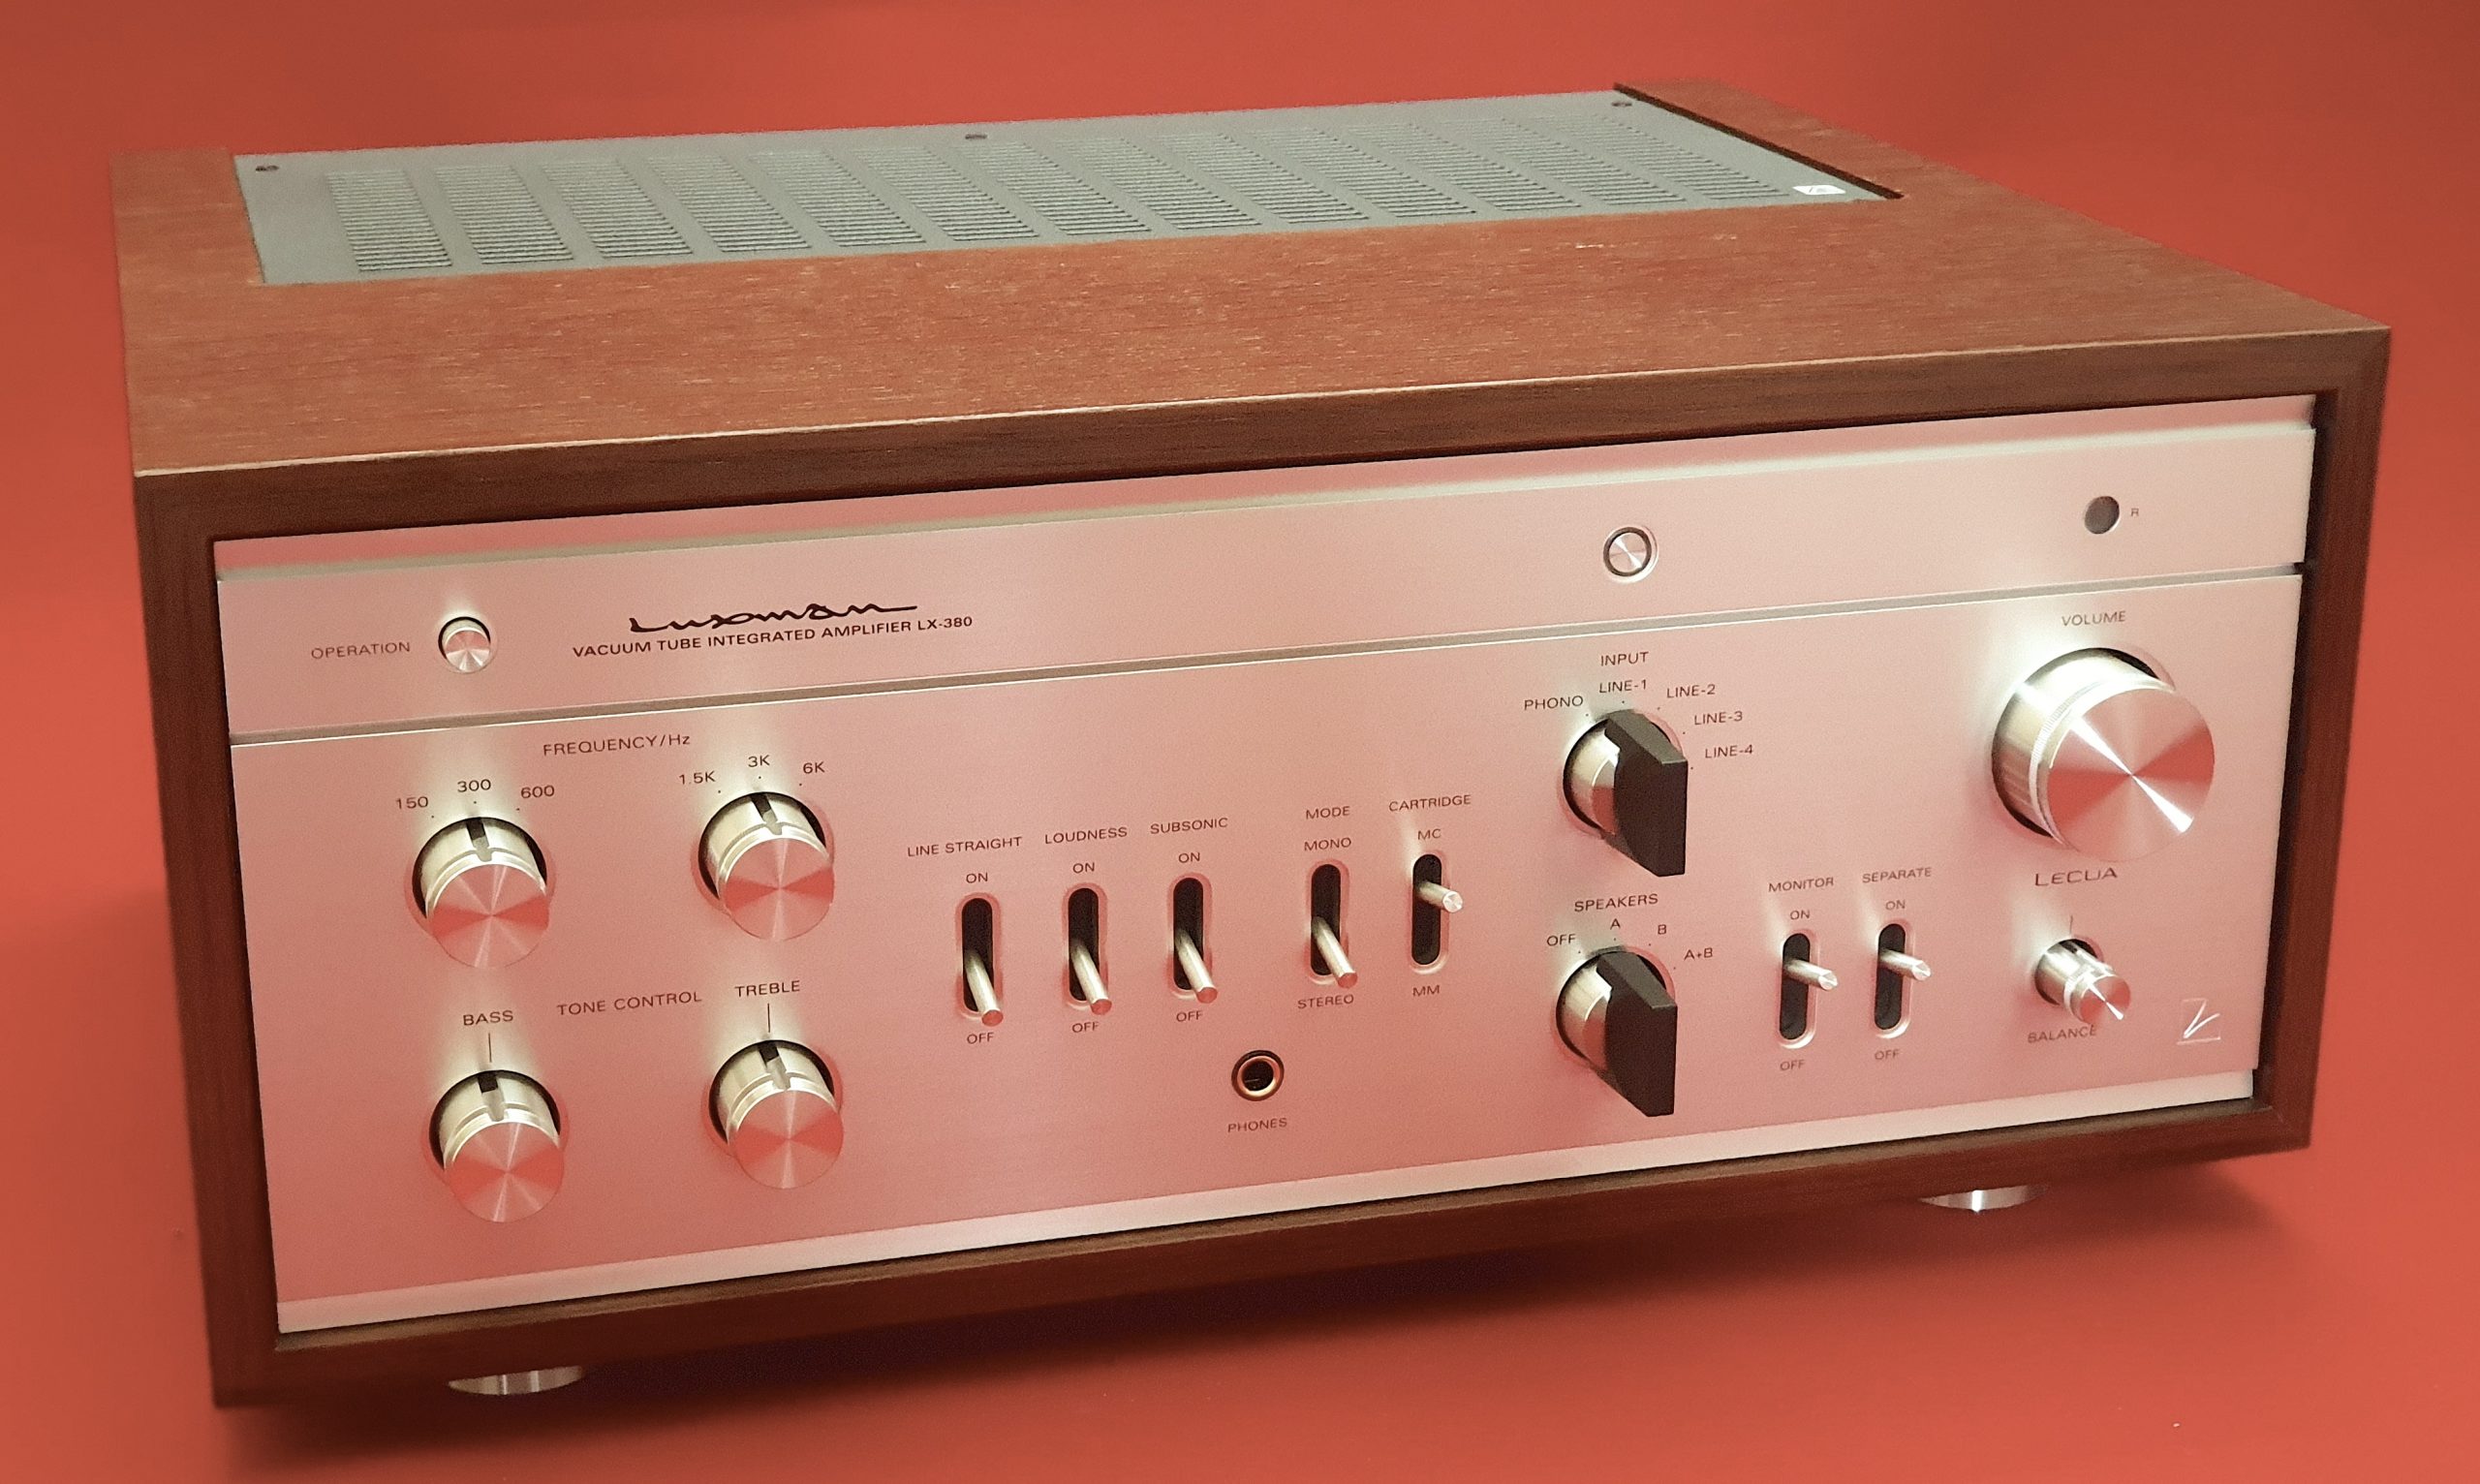 Luxman LX-380 amplifier – a modern take on the vintage – audioFi.net